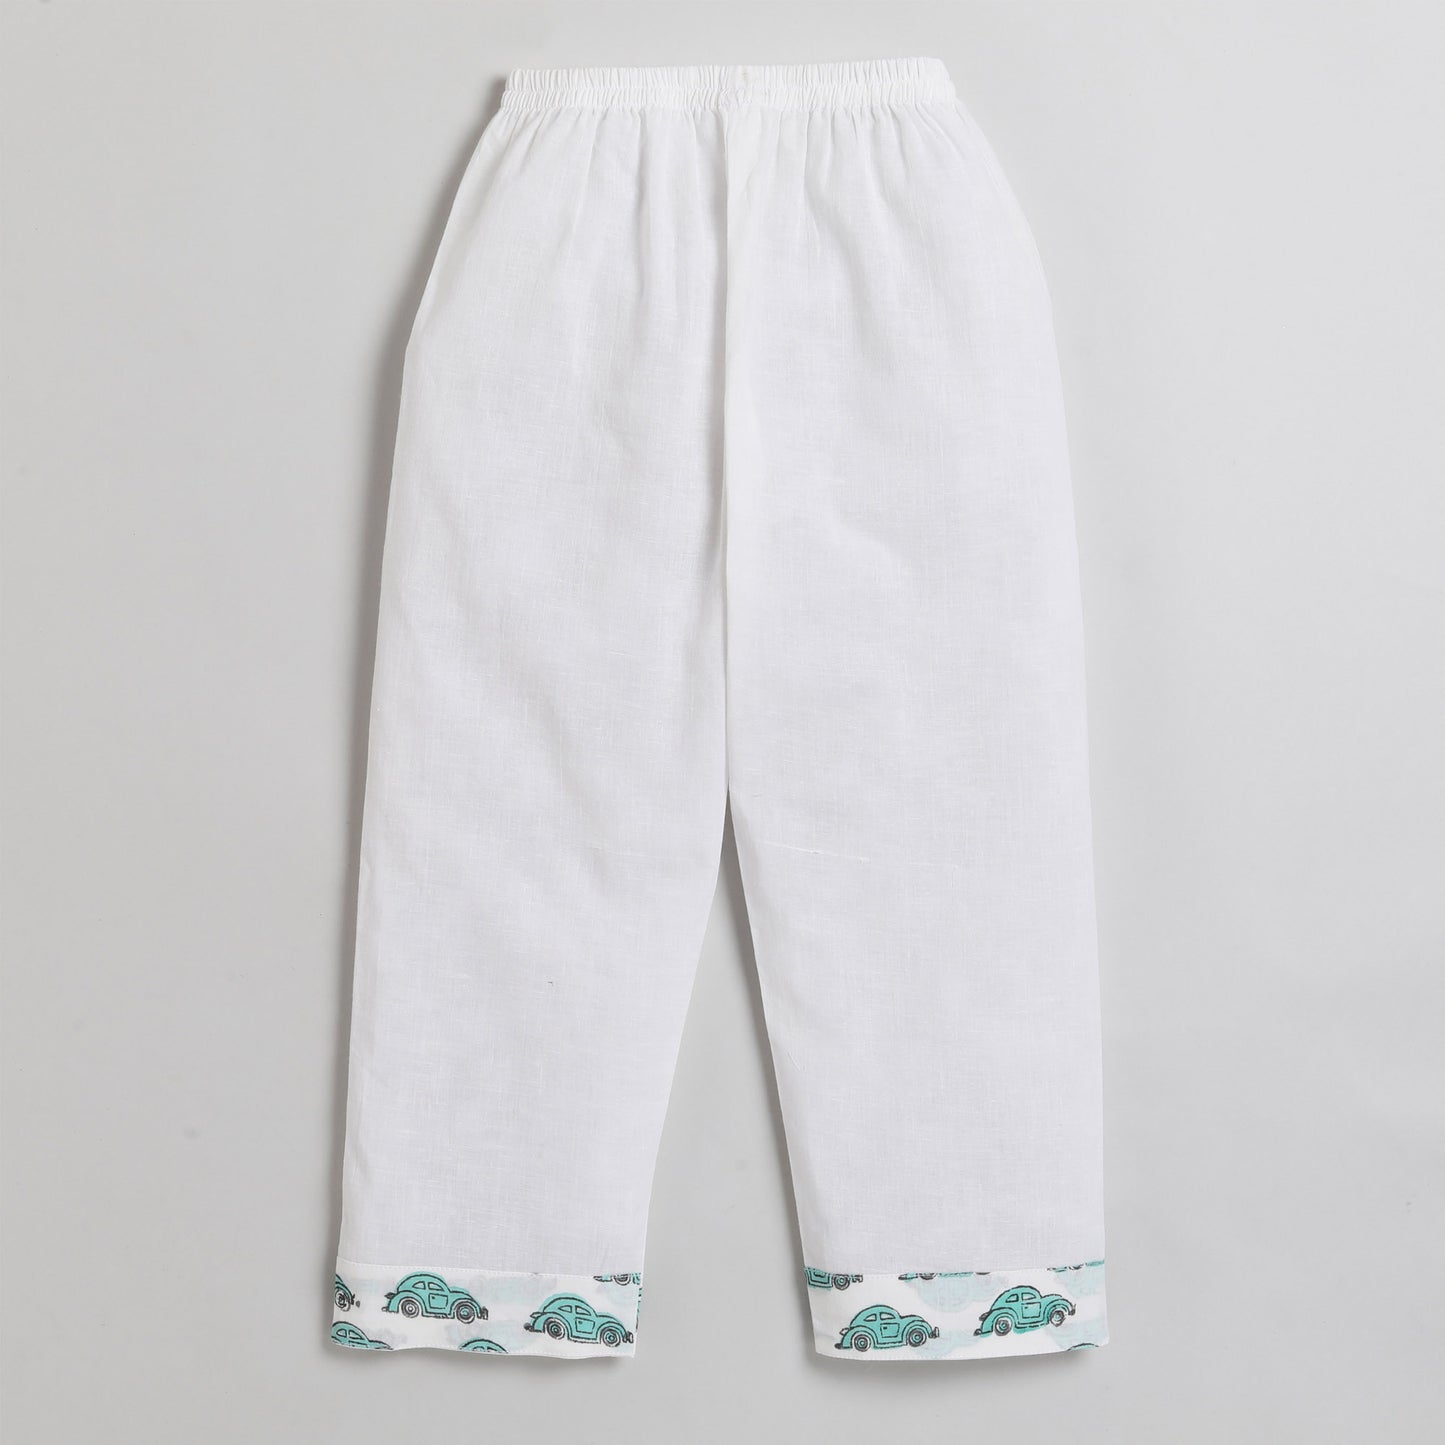 Polka Tots Kurta Pajama for Kids 100% Super Soft Cotton Night Suits for Boys & Girls Green Car Print - White